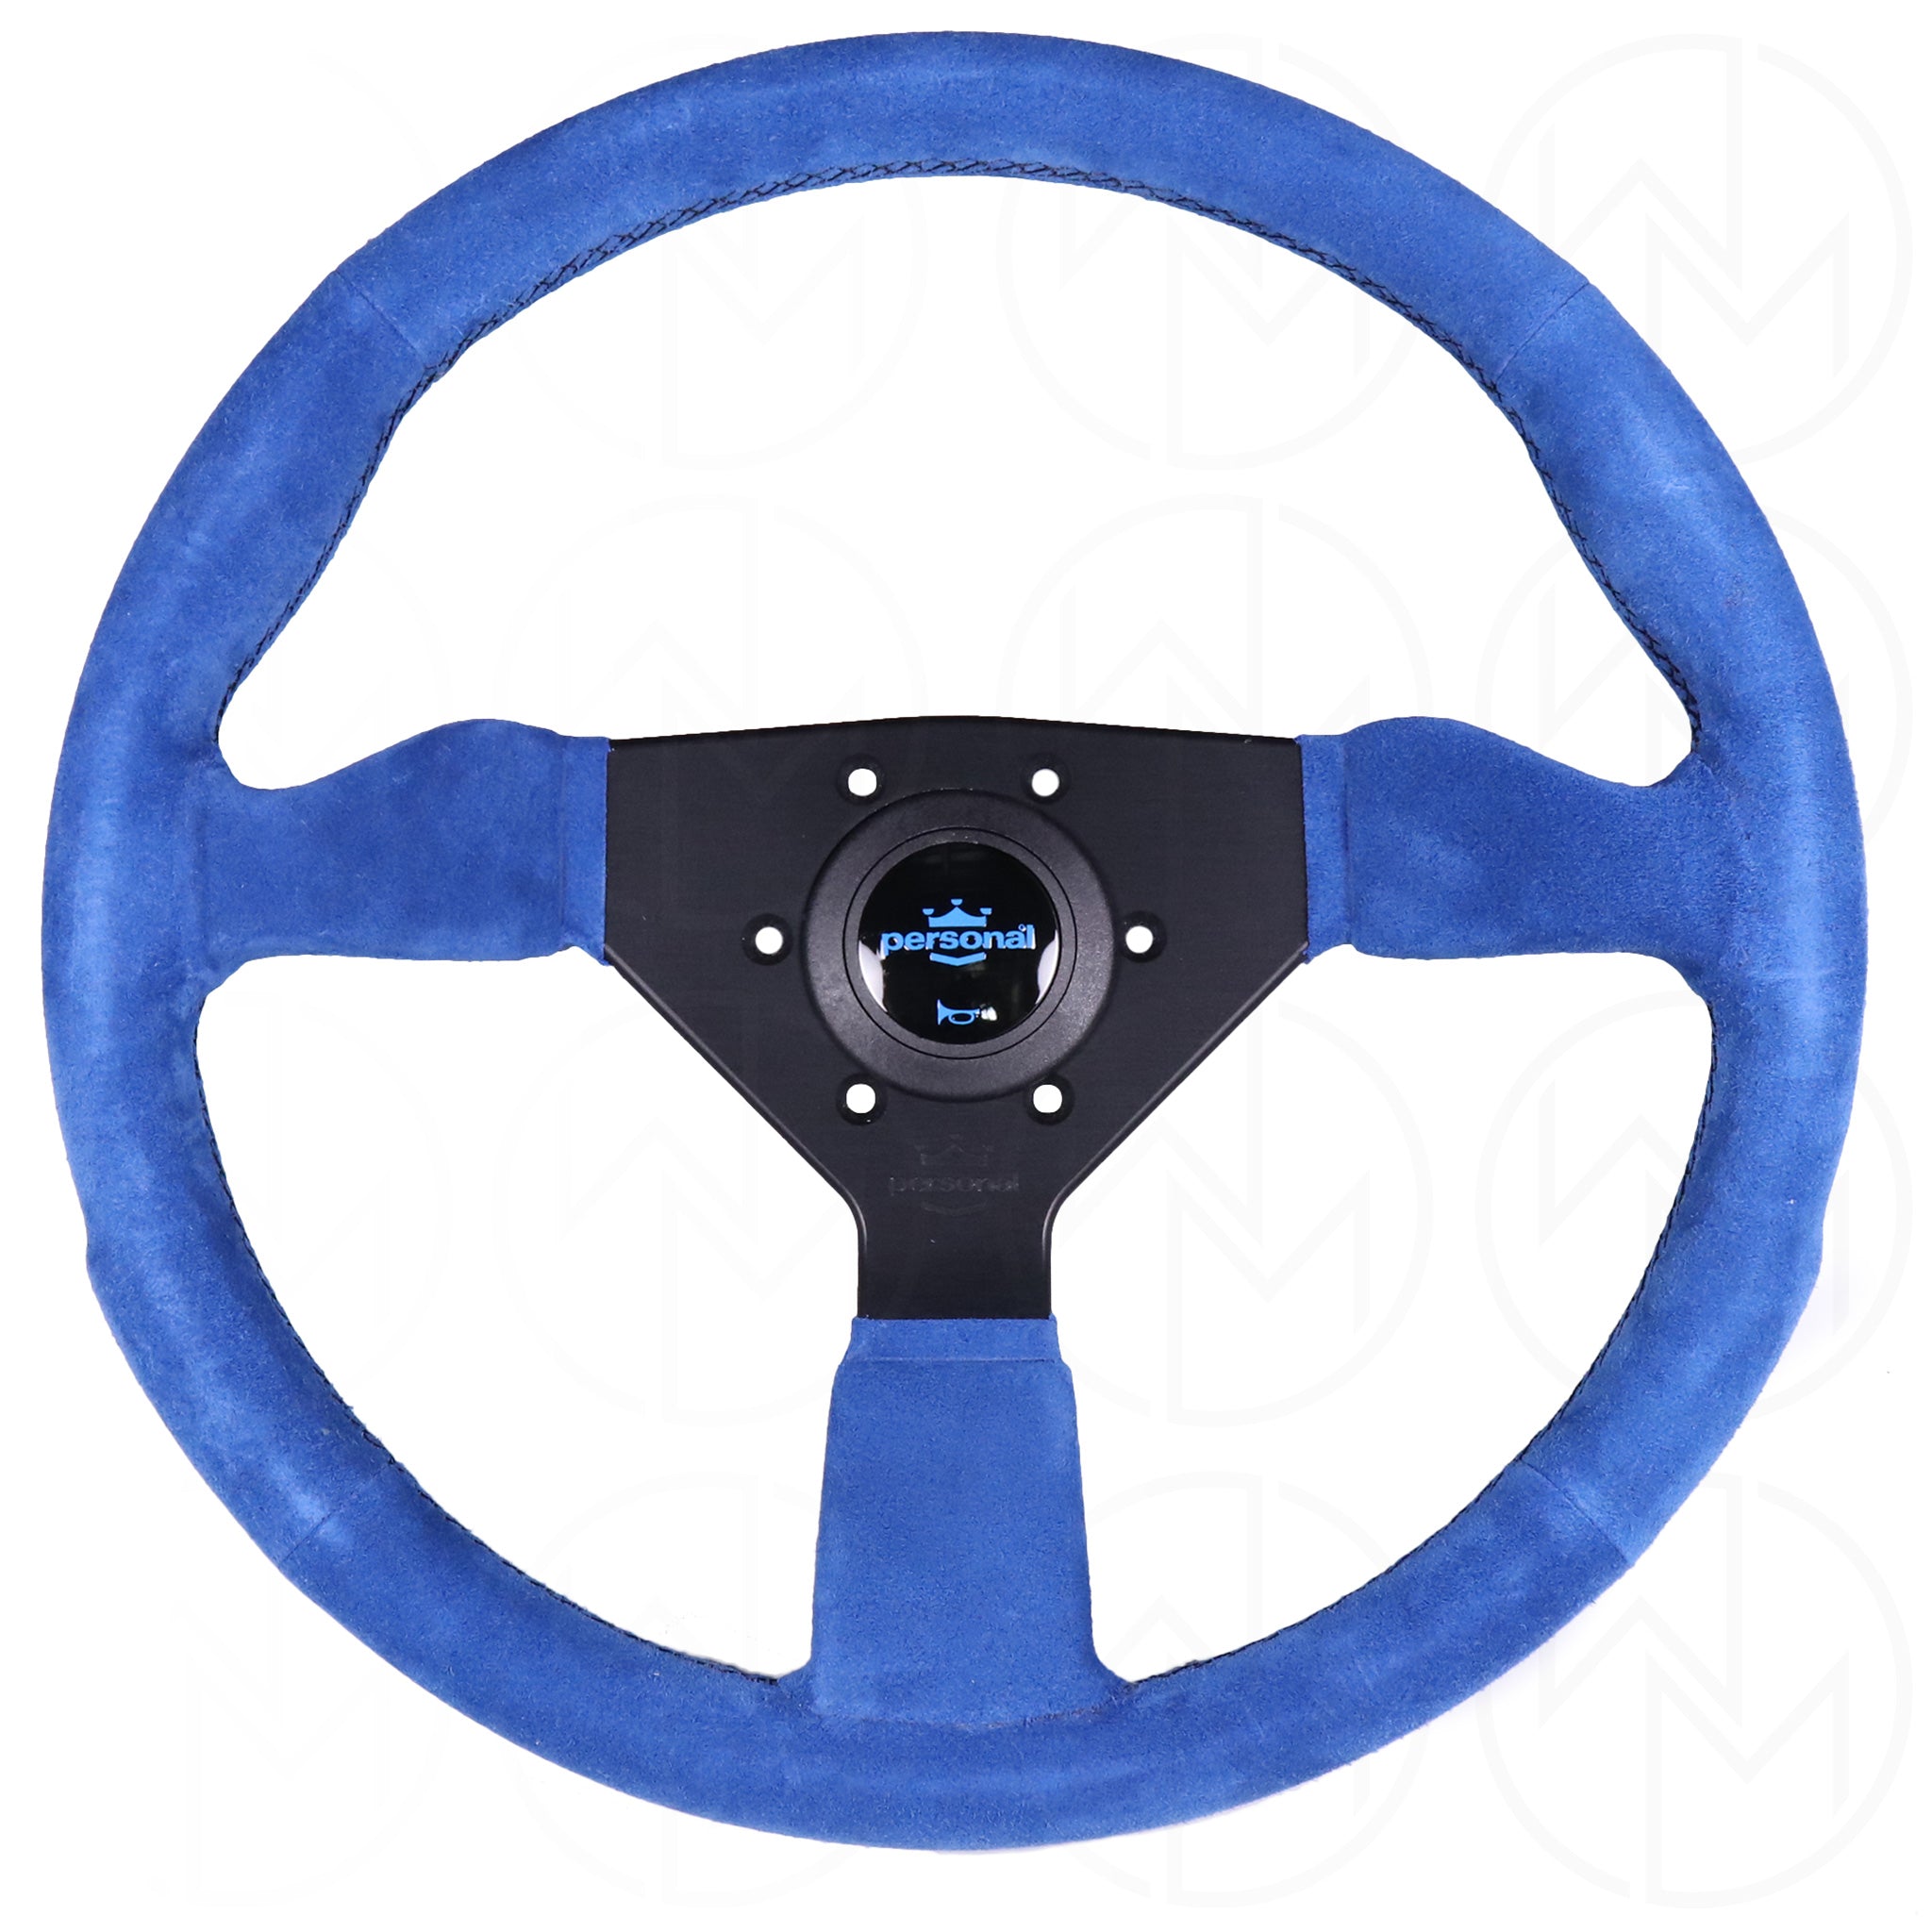 Personal Grinta Steering Wheel - 350mm Blue Suede w/Black Stitch